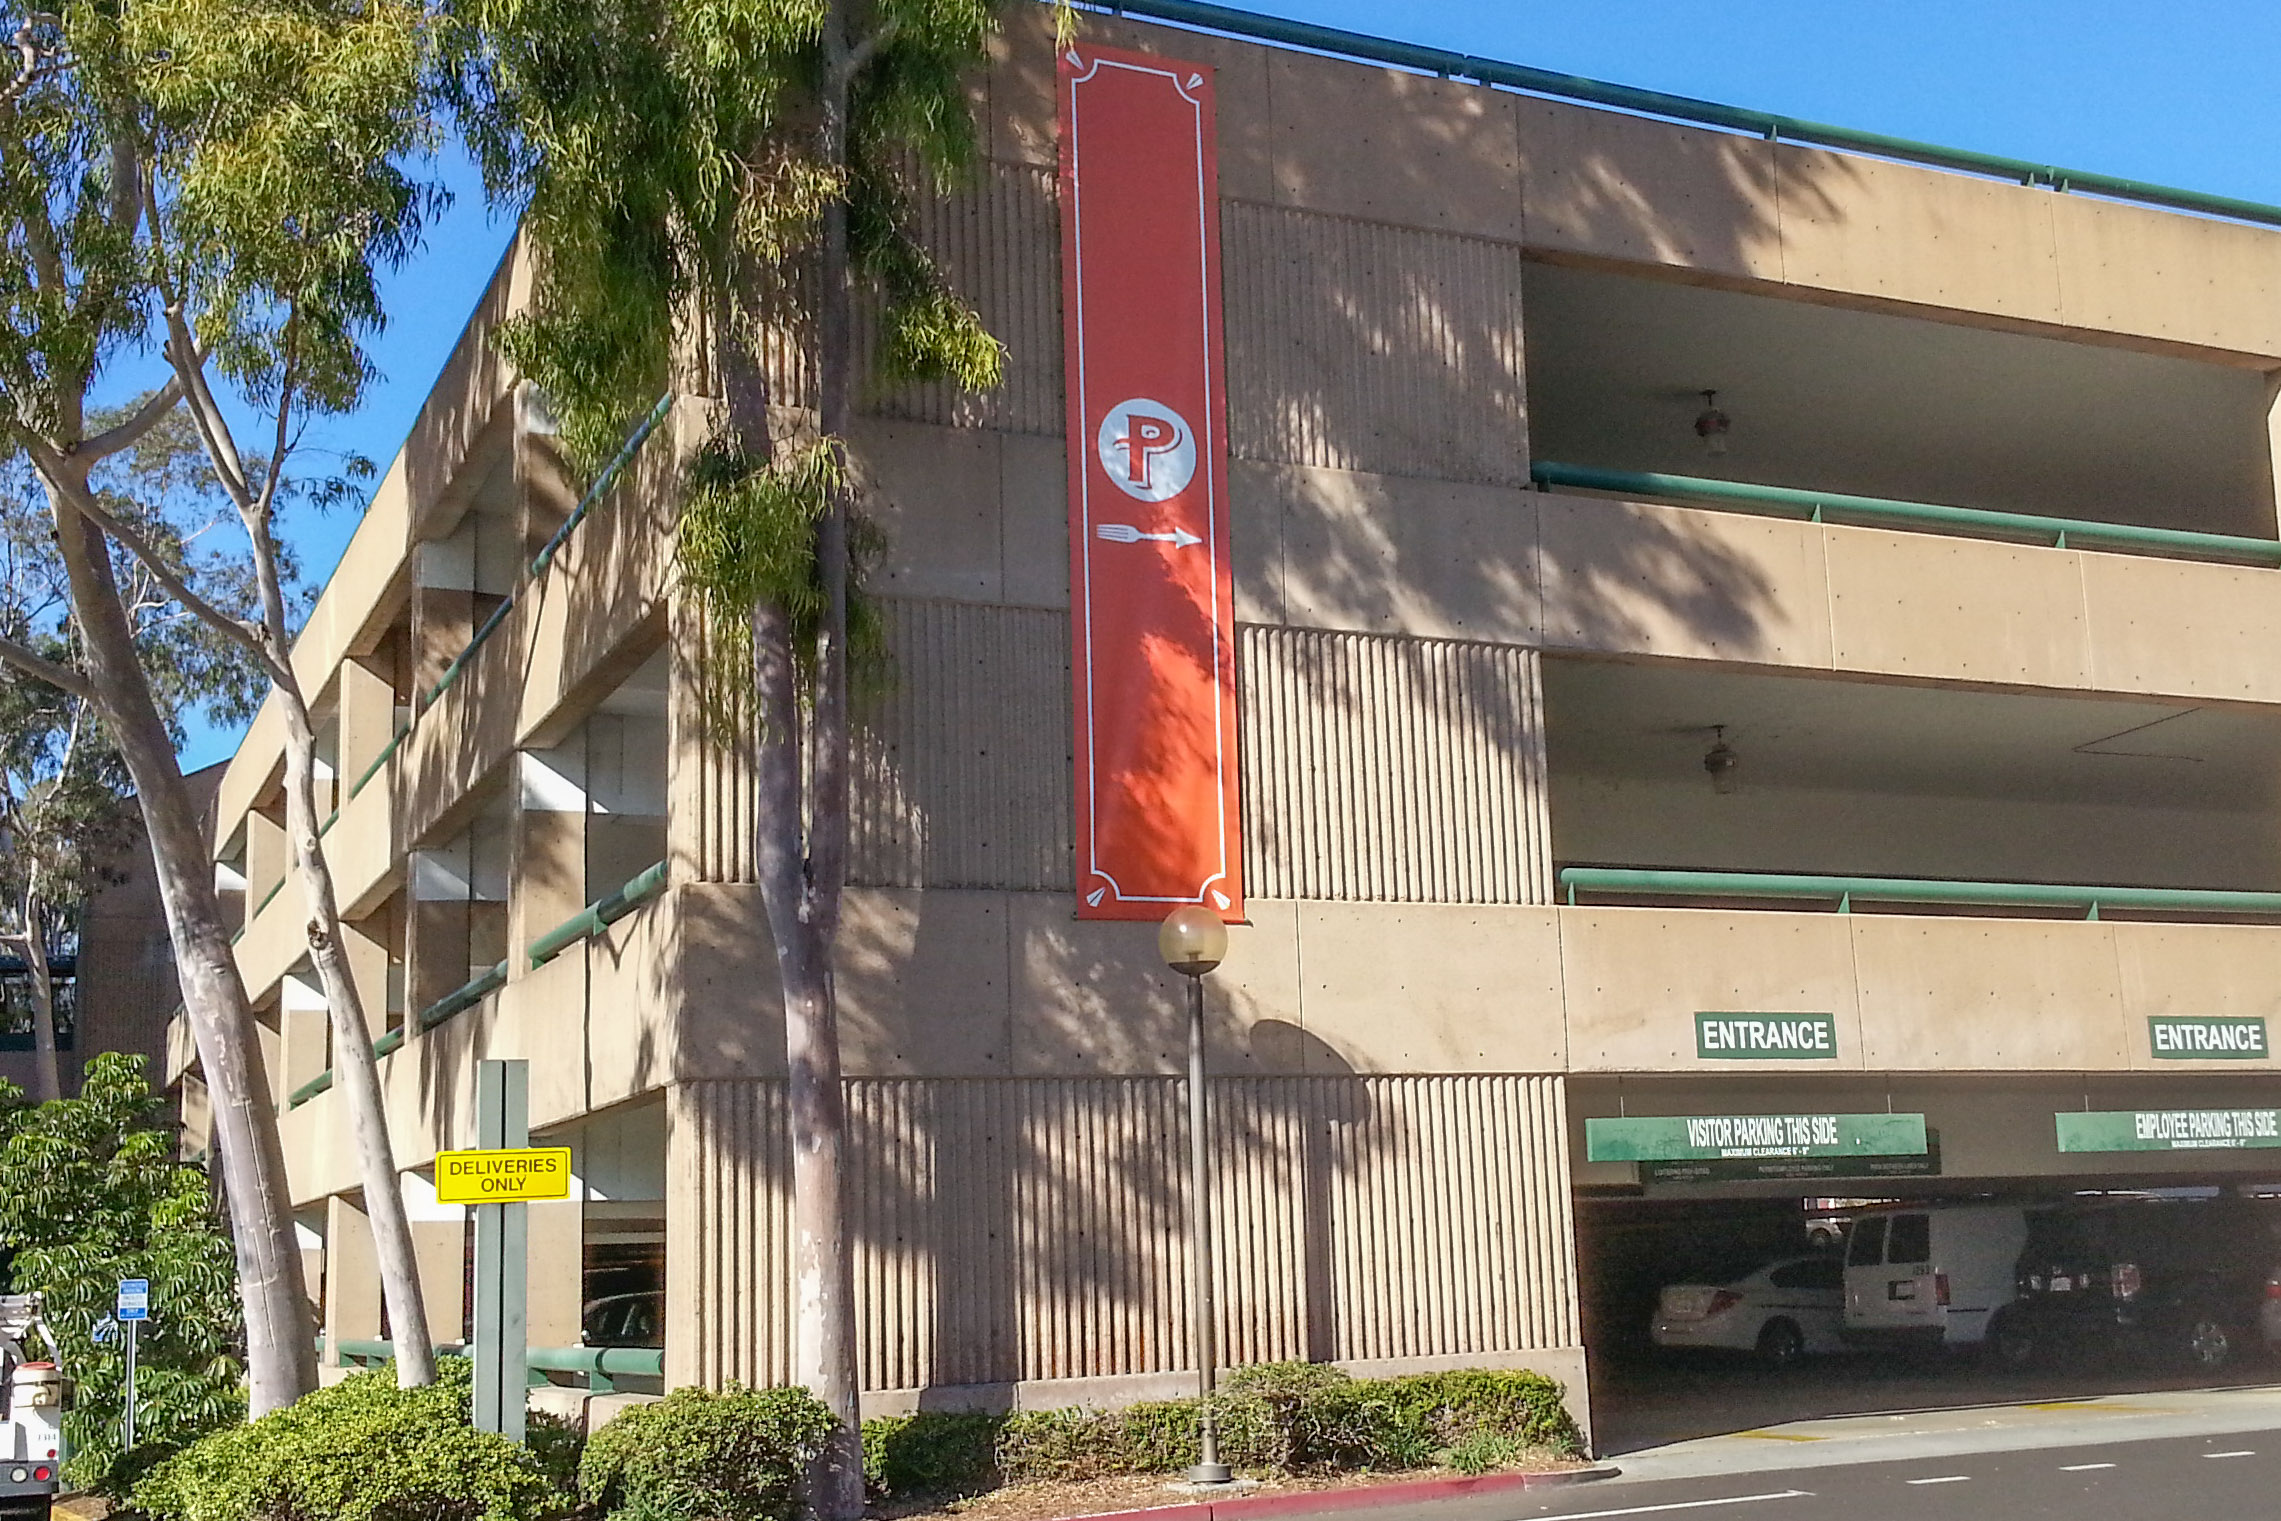 Anaheim Packing District parking directional custom banner